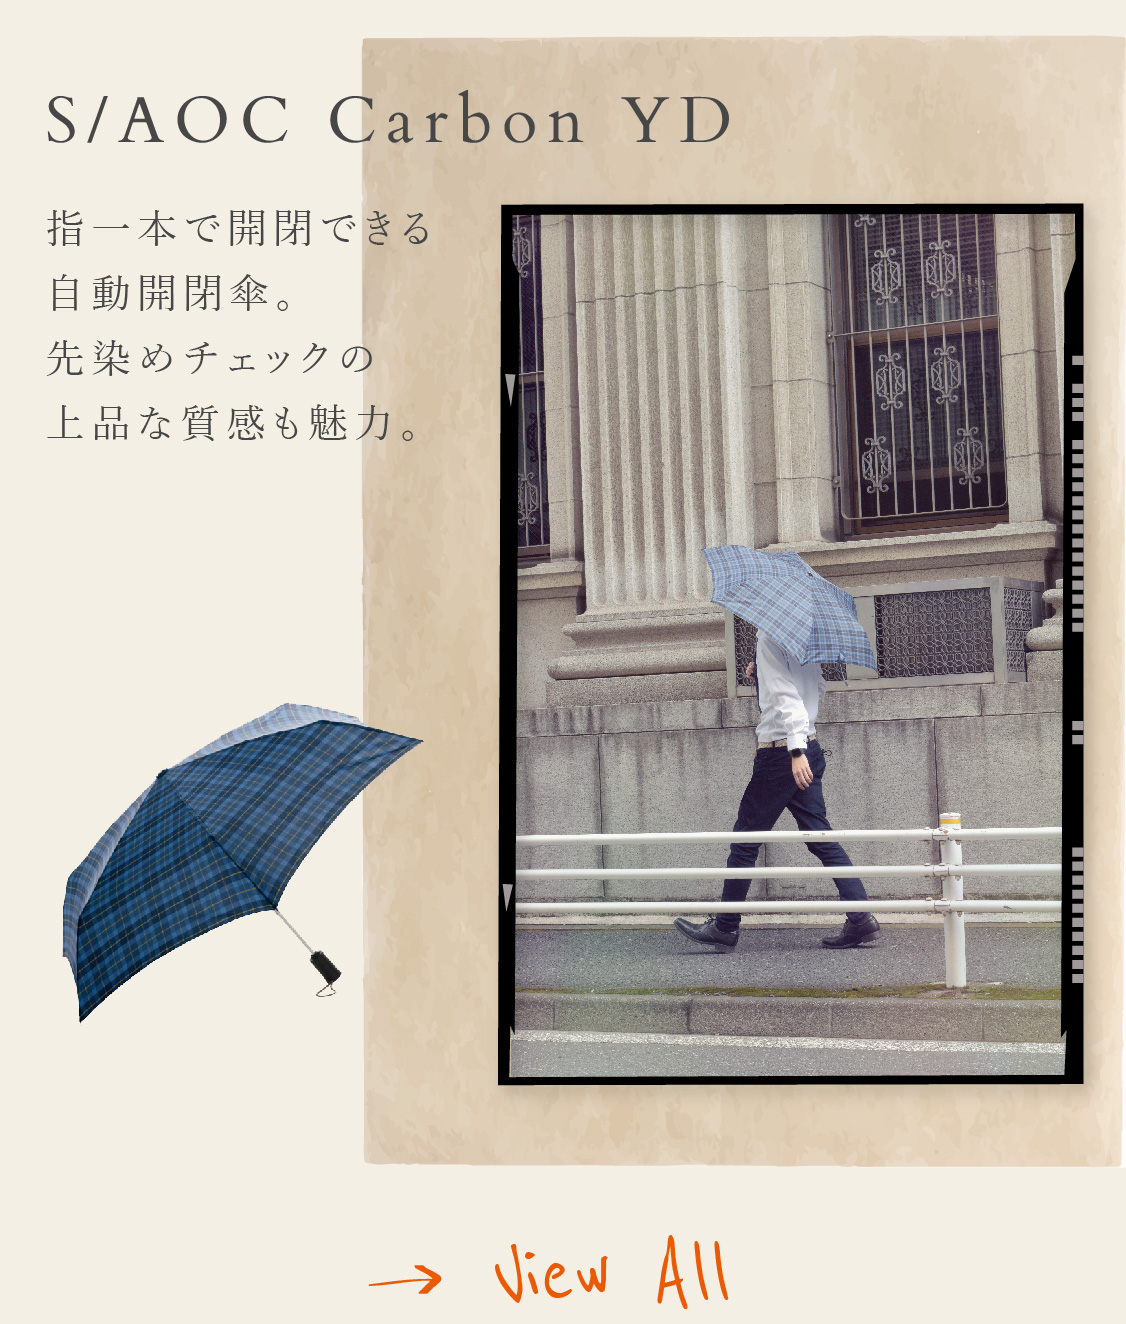 S/AOC carbonYD